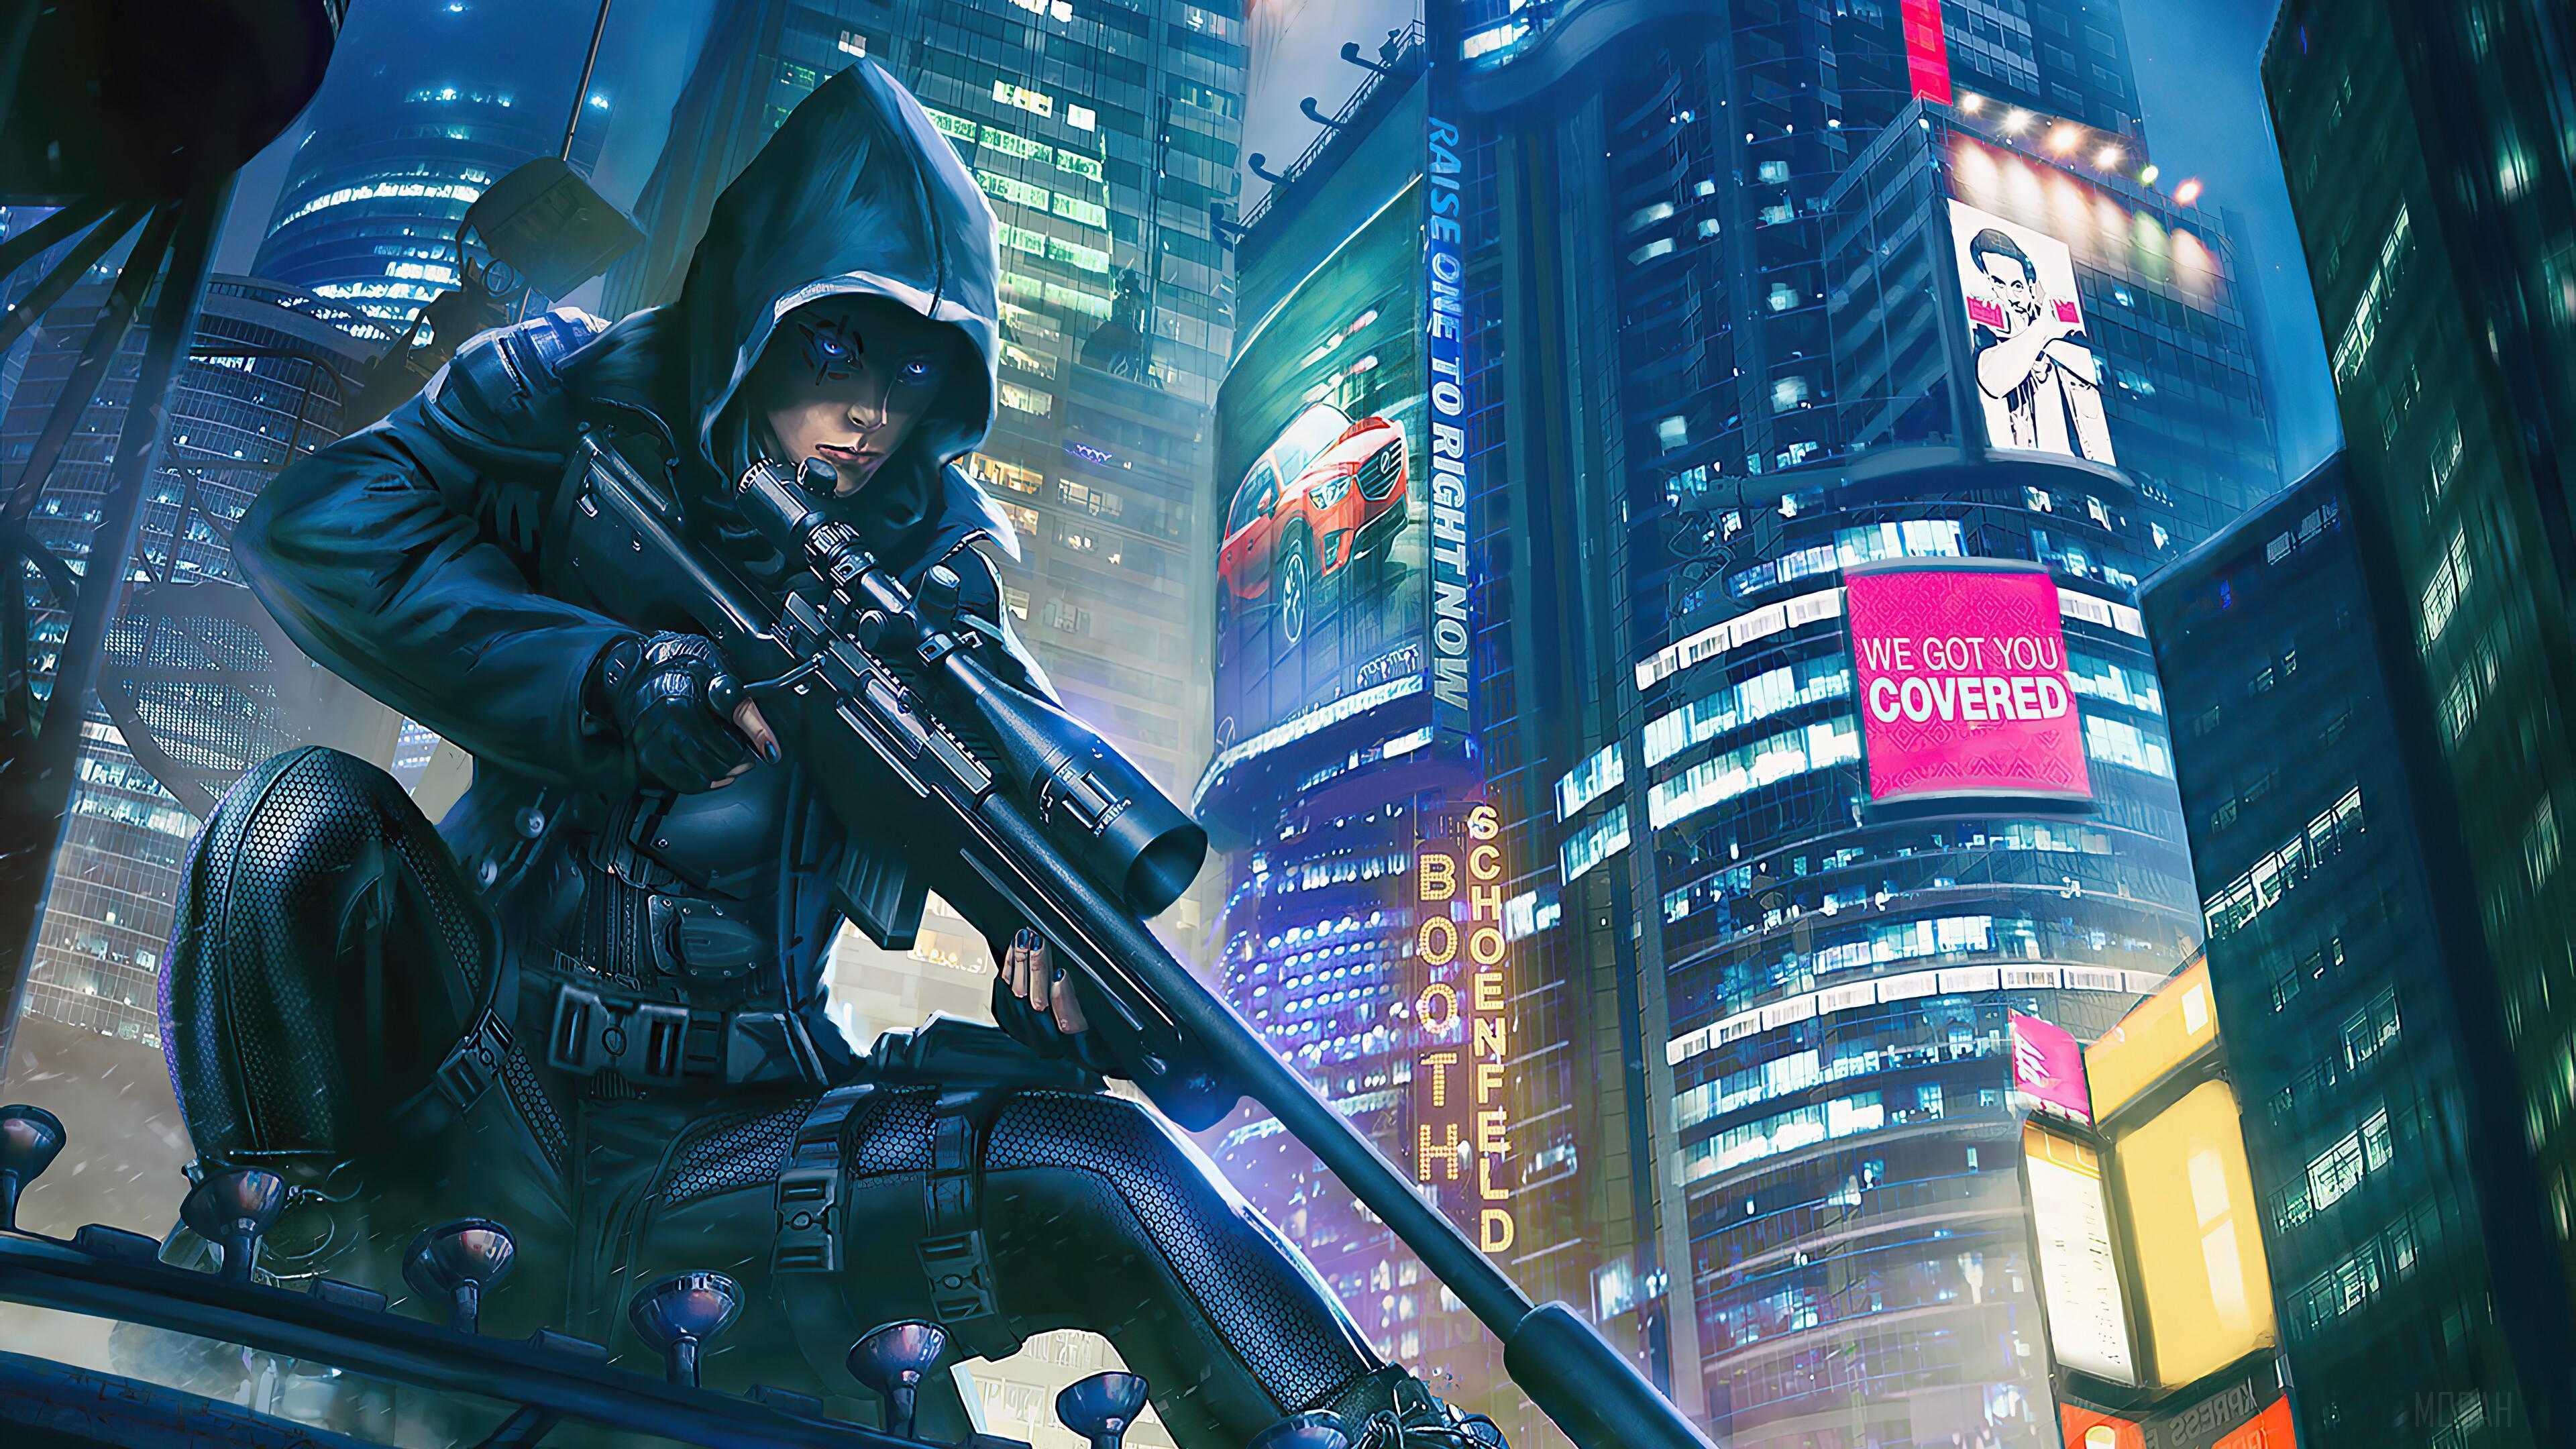 HD wallpaper, City, Night, Sniper, Assassin 4K, Buildings, Cyberpunk, Sci Fi, Science Fiction